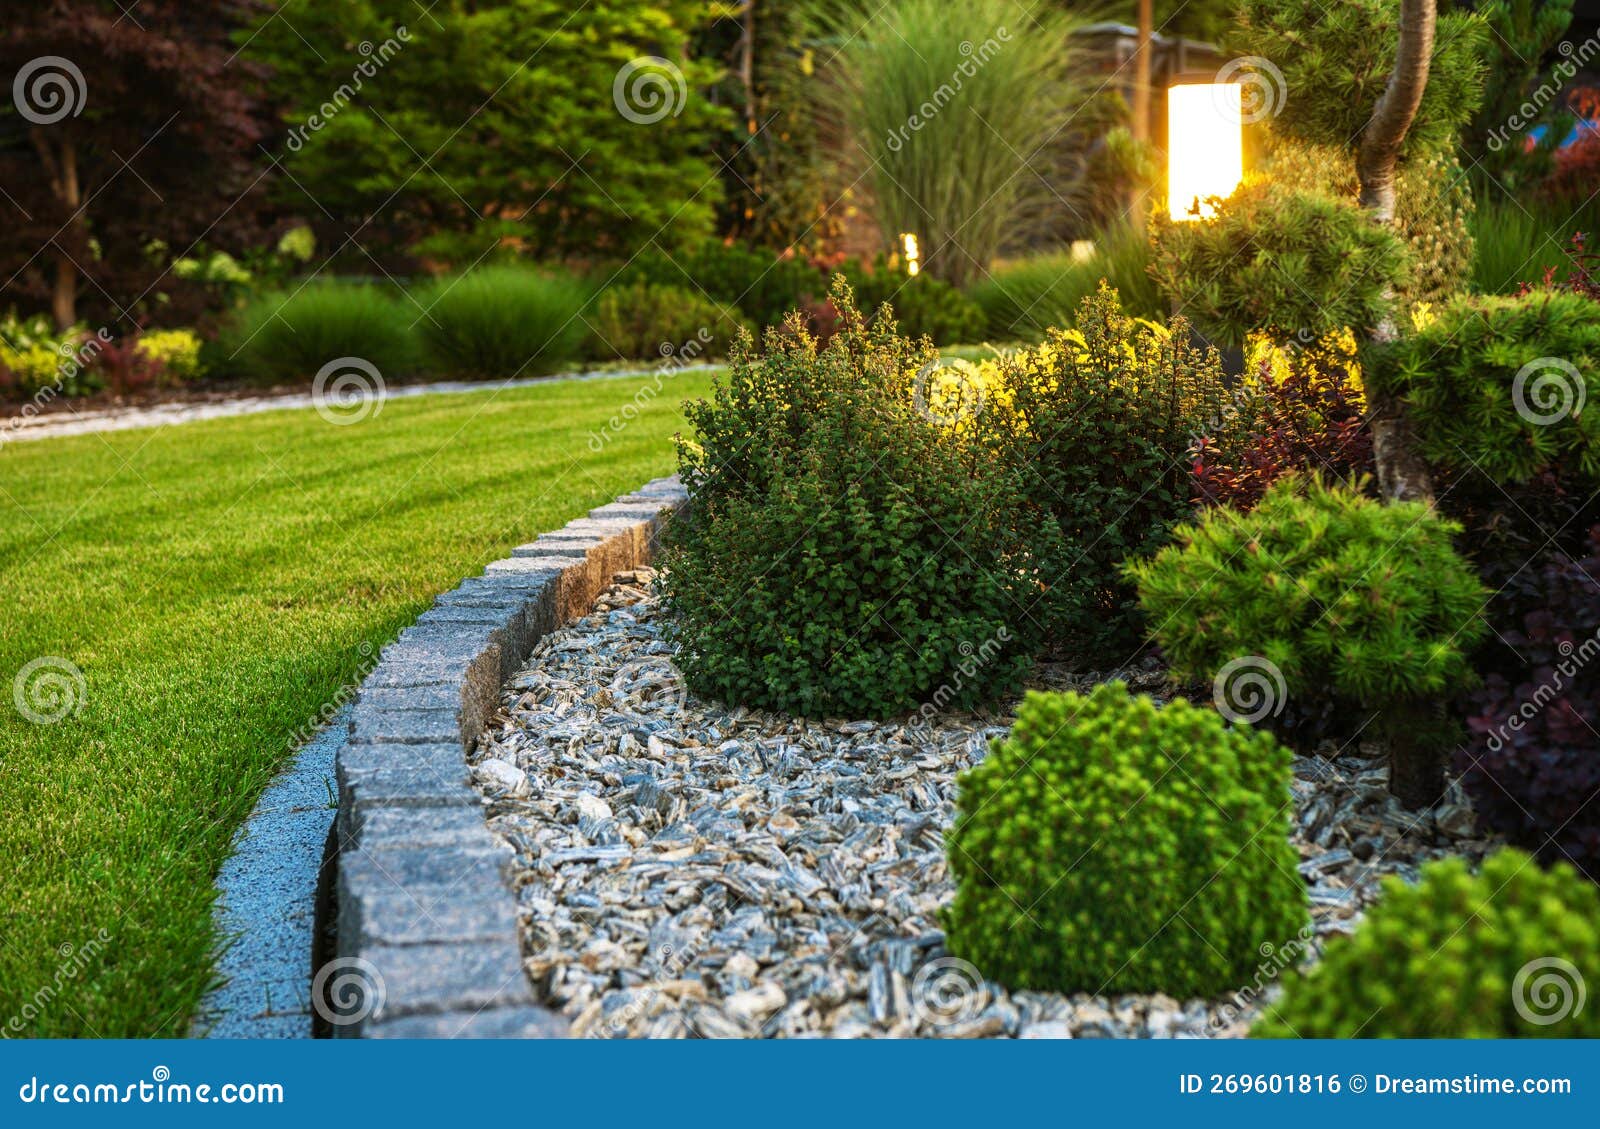 professionally landscaped garden flower bed